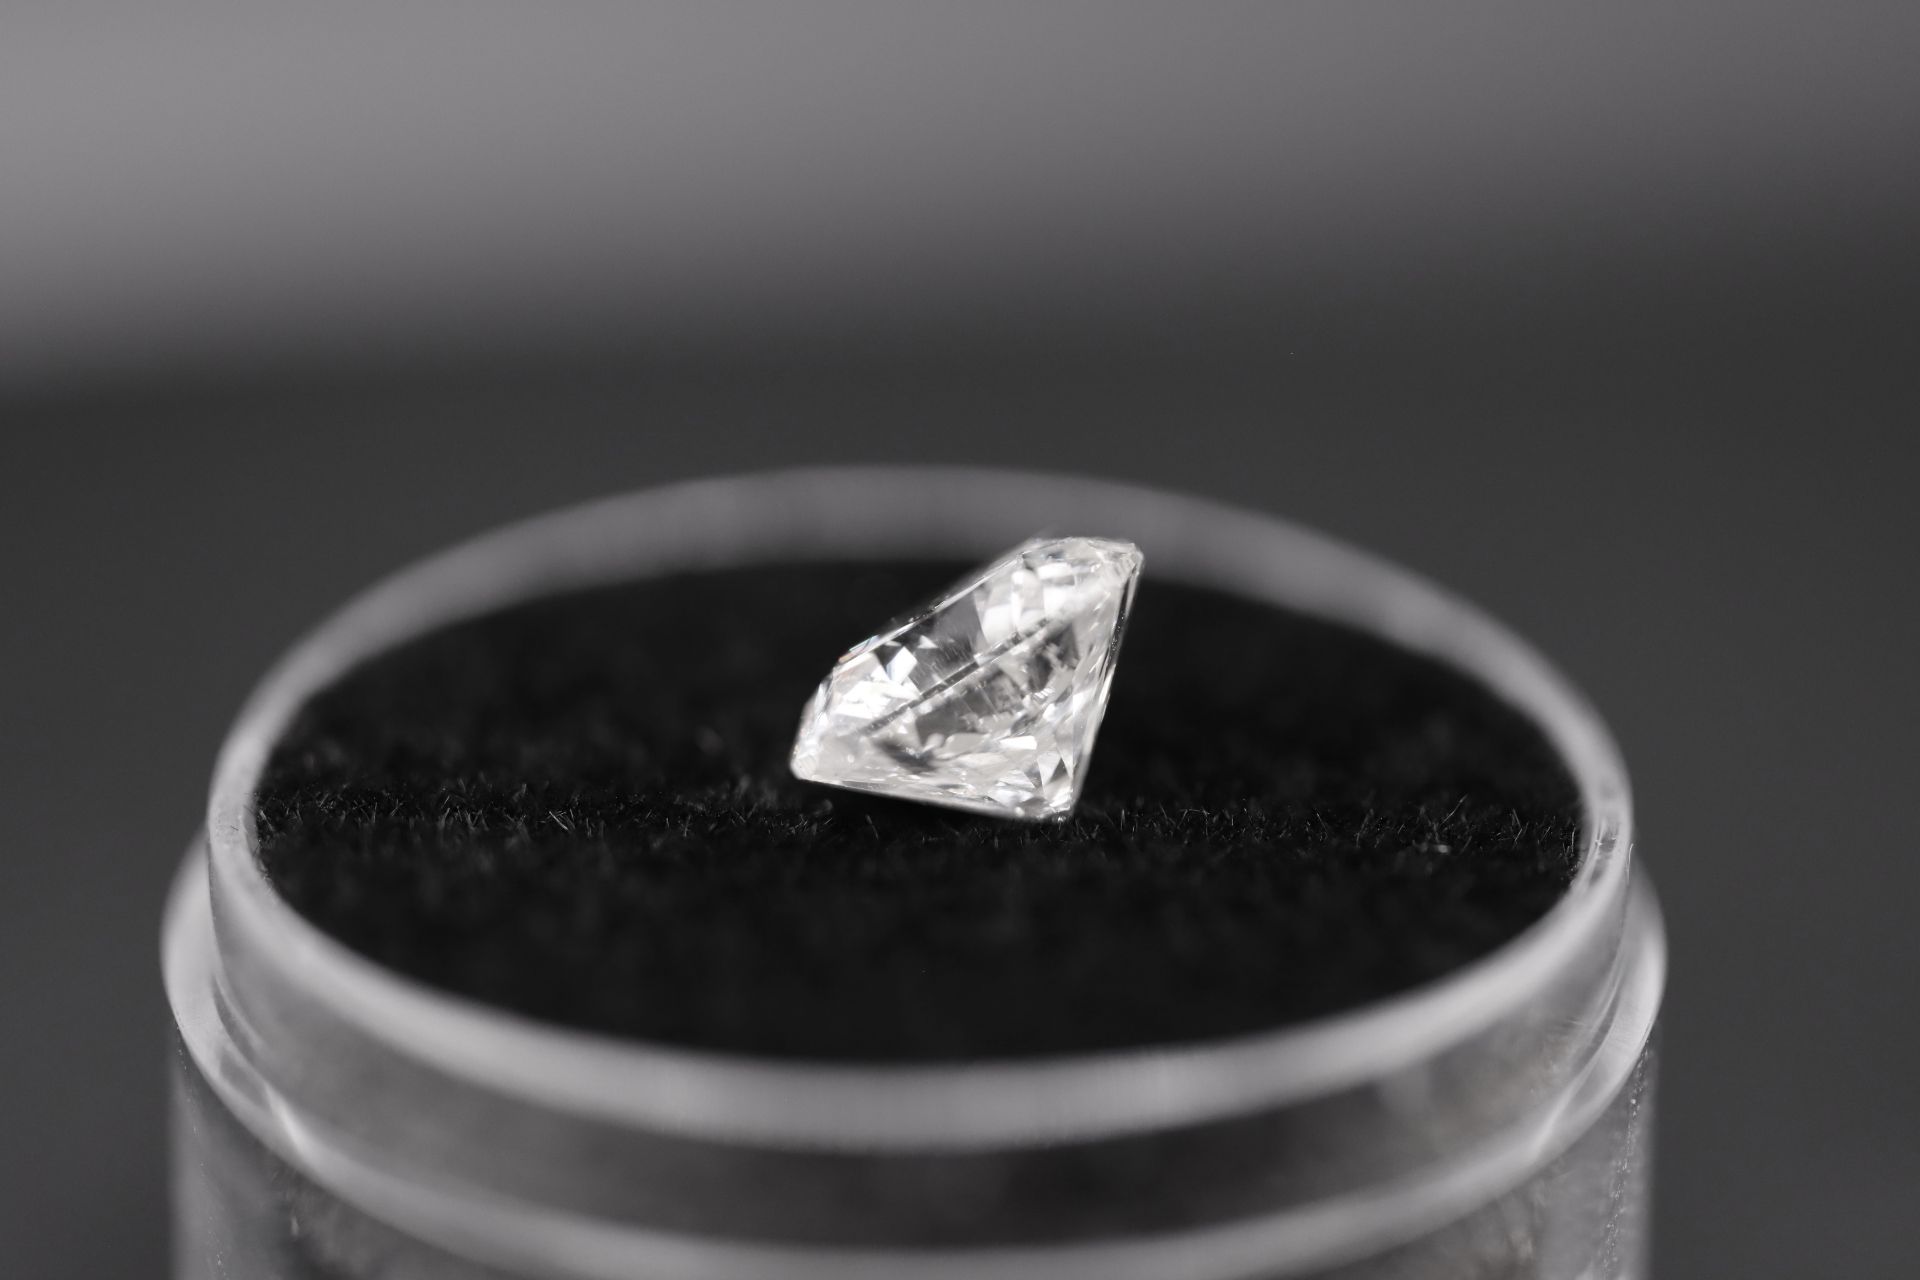 Round Brilliant Cut Natural Diamond 2.01 Carat Colour D Clarity VS1 - DGI Certificate - Image 19 of 24